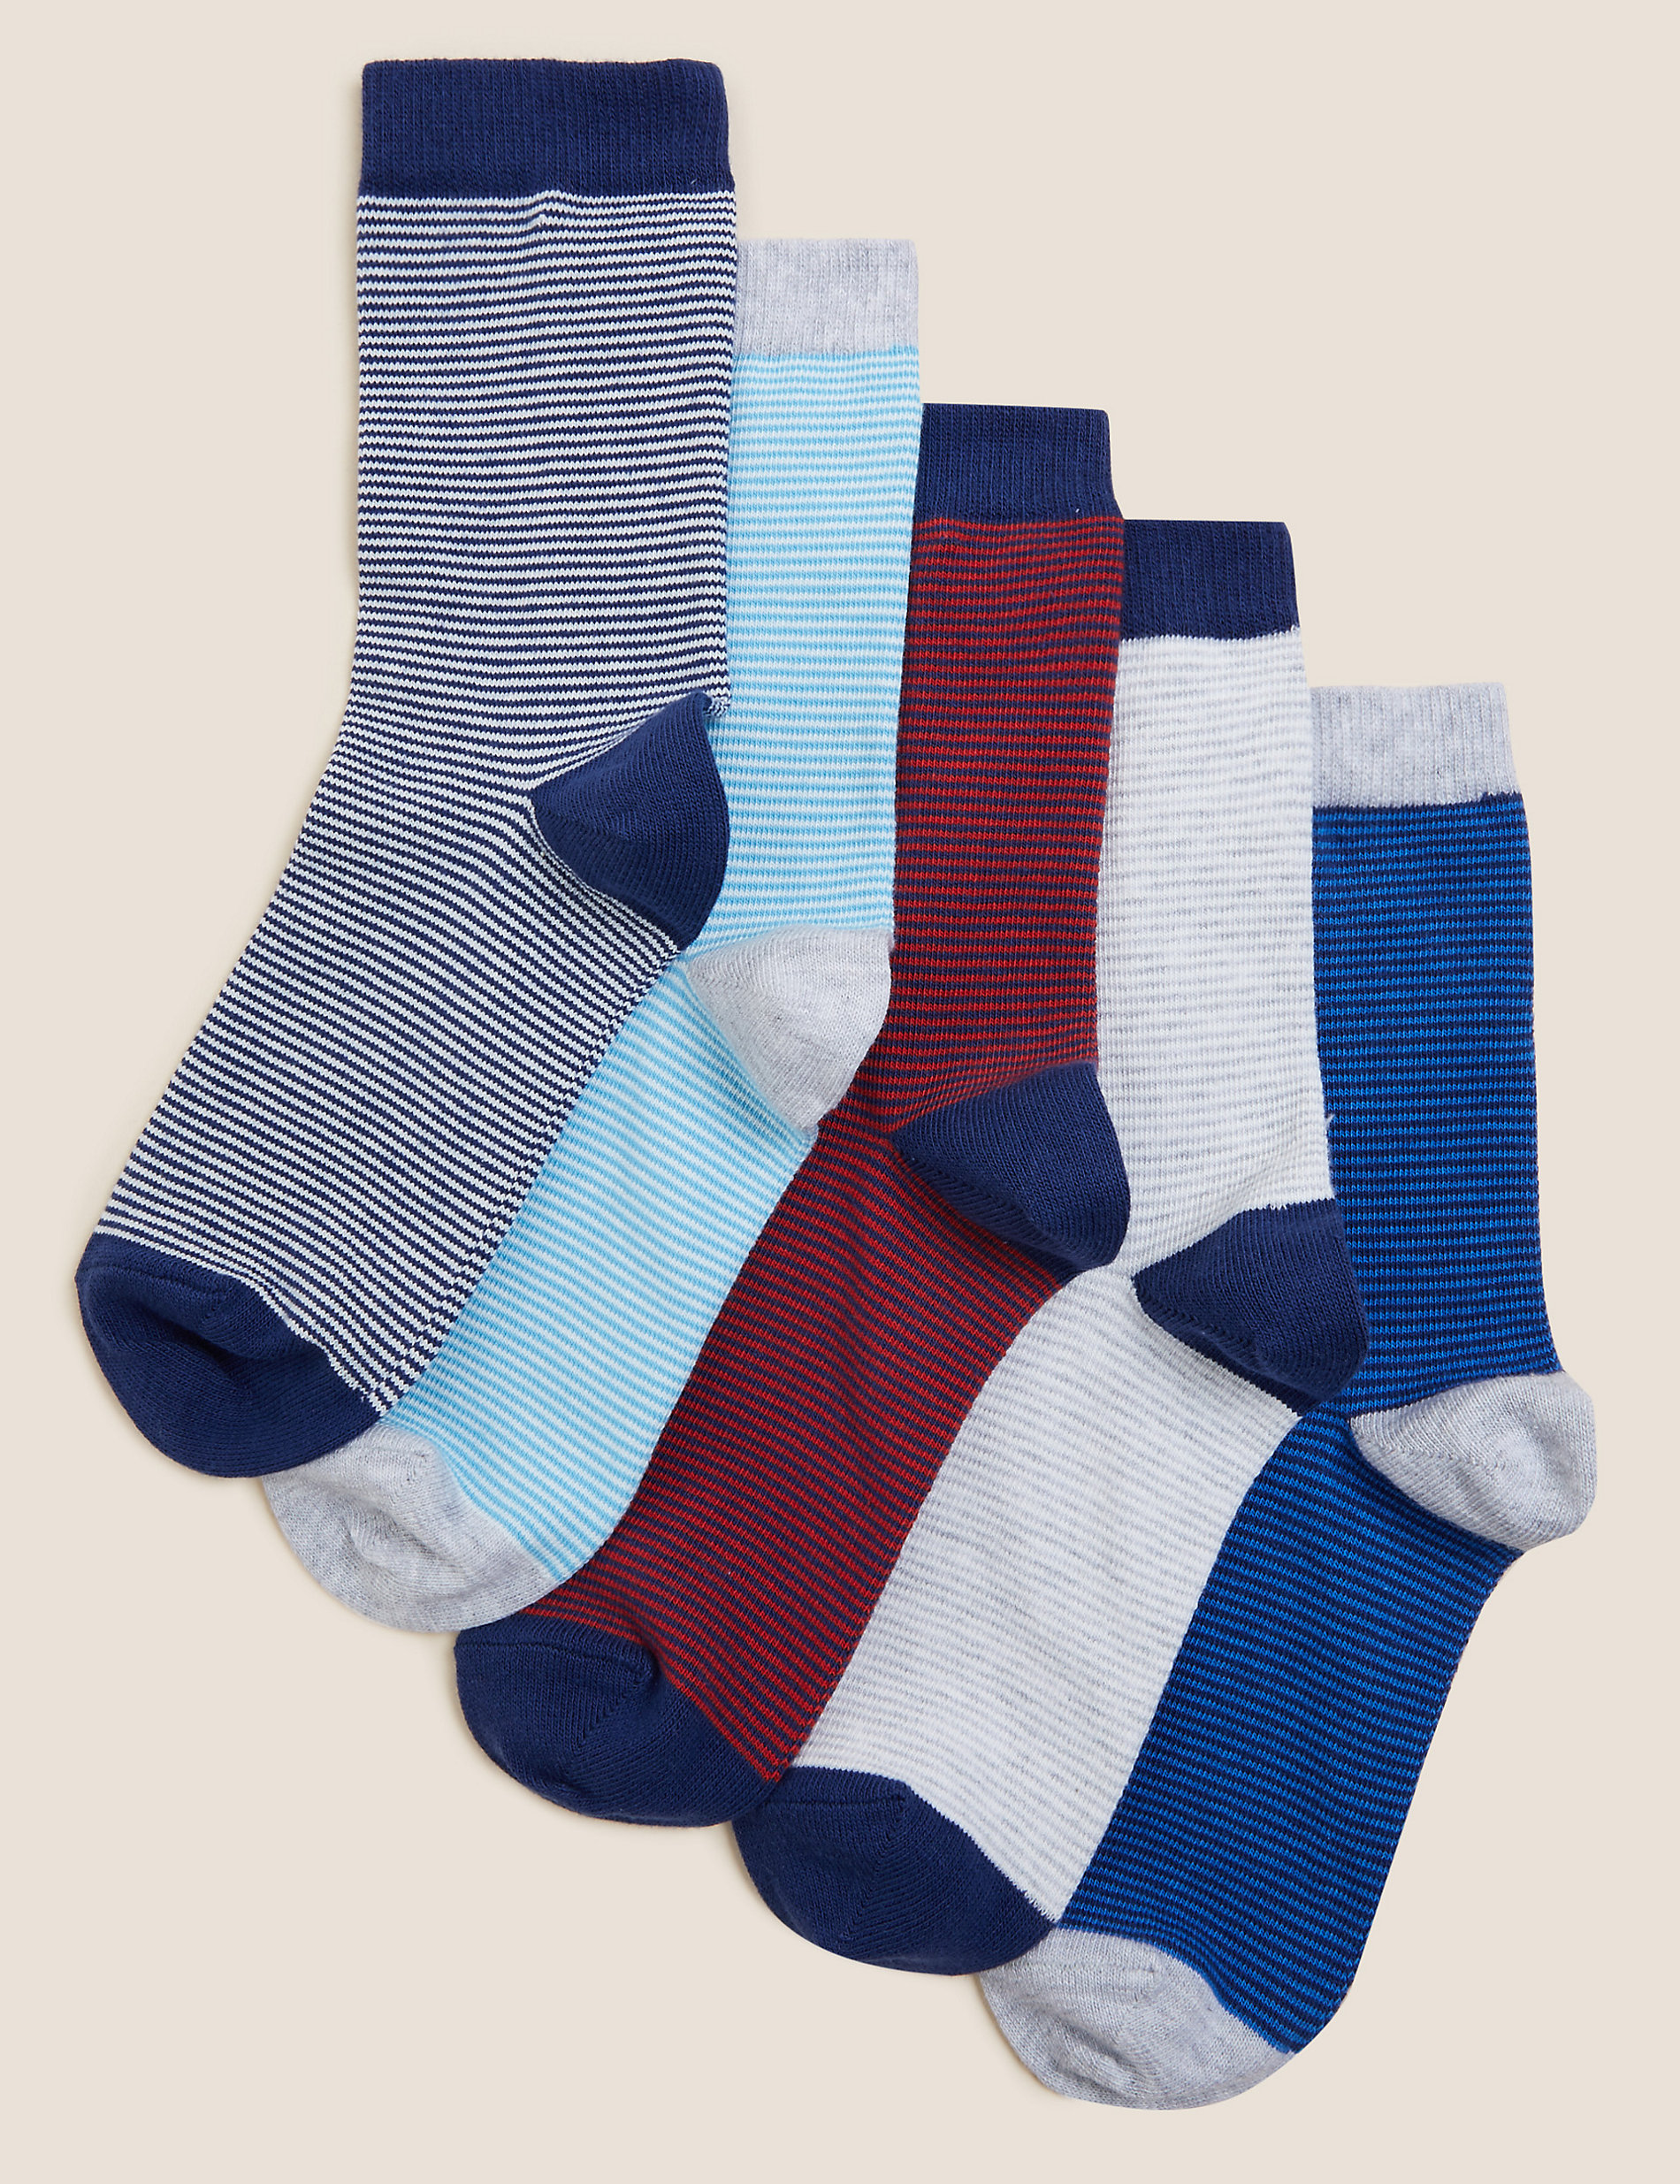 Marks & Spencer Boys Clothing Underwear Socks 5pk Cotton Rich Striped Socks 